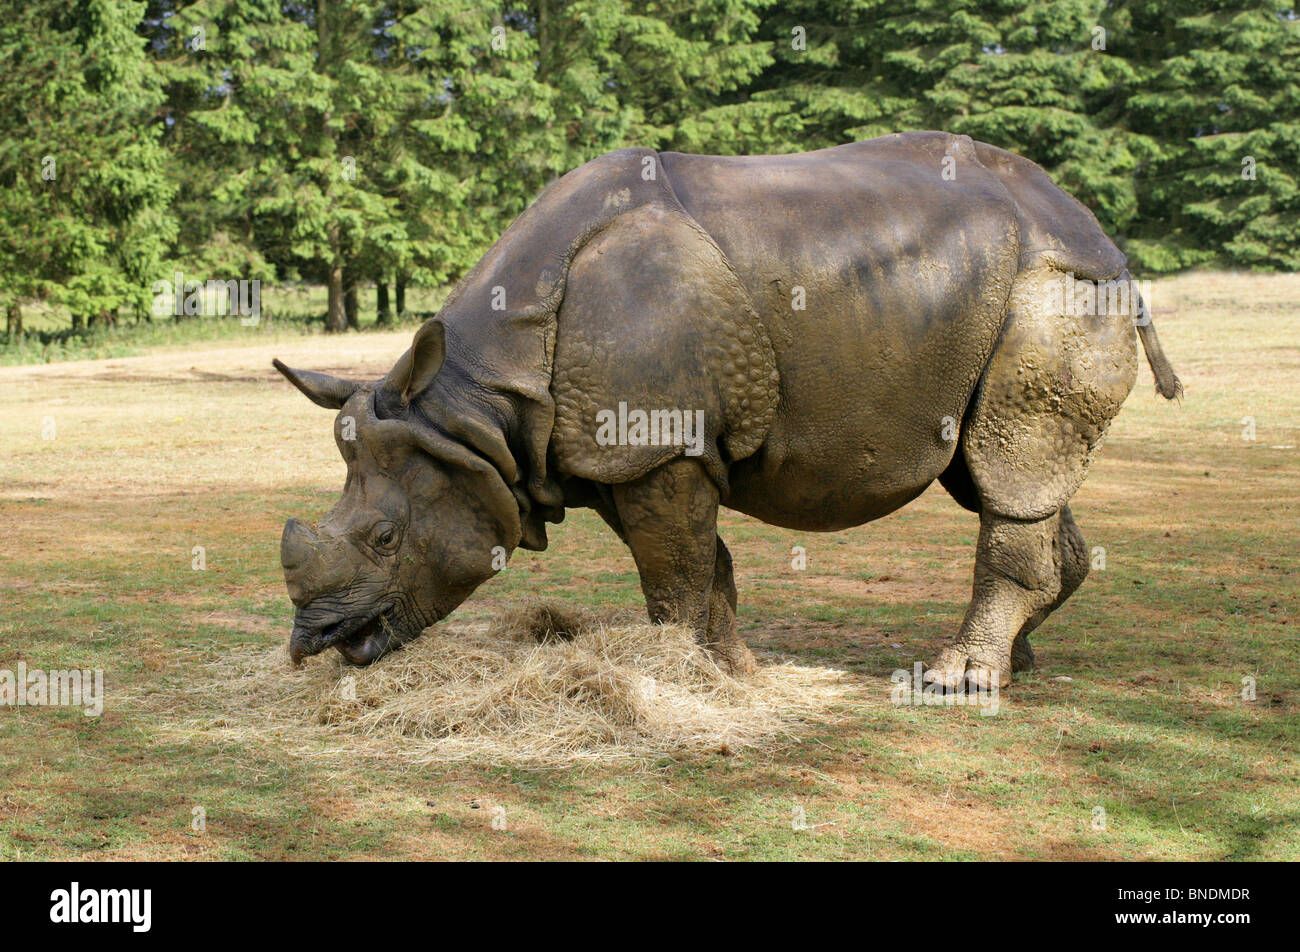 Affaires indiennes, asiatiques ou rhinocéros à une corne, Rhinoceros unicornis, Rhinocerotidae. Banque D'Images